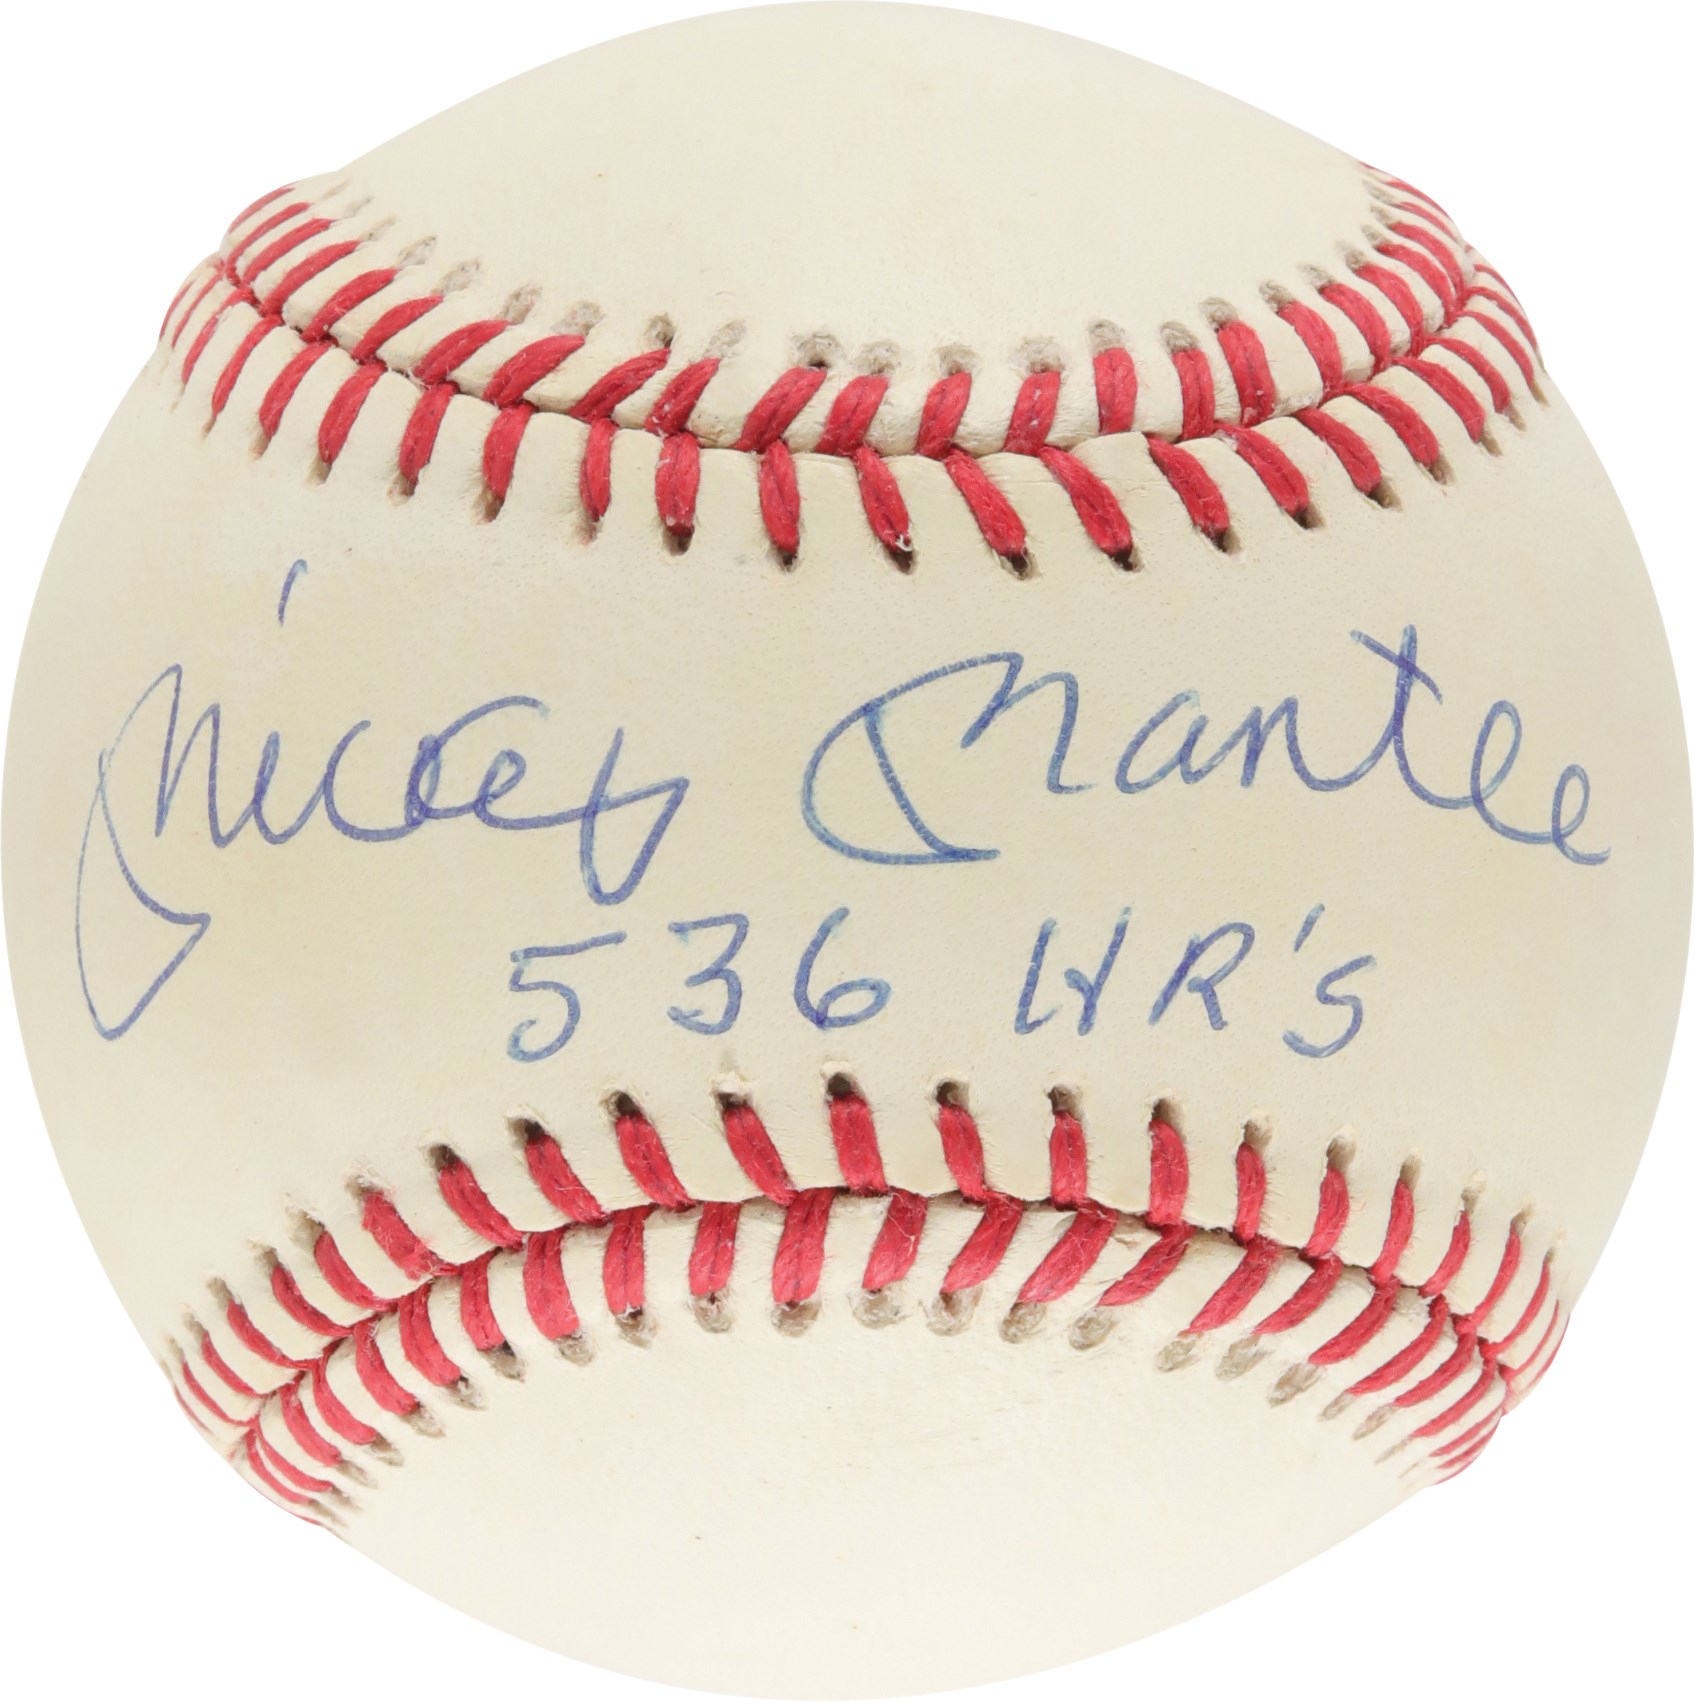 - Mickey Mantle "536 HR's" Single-Signed Baseball (PSA)